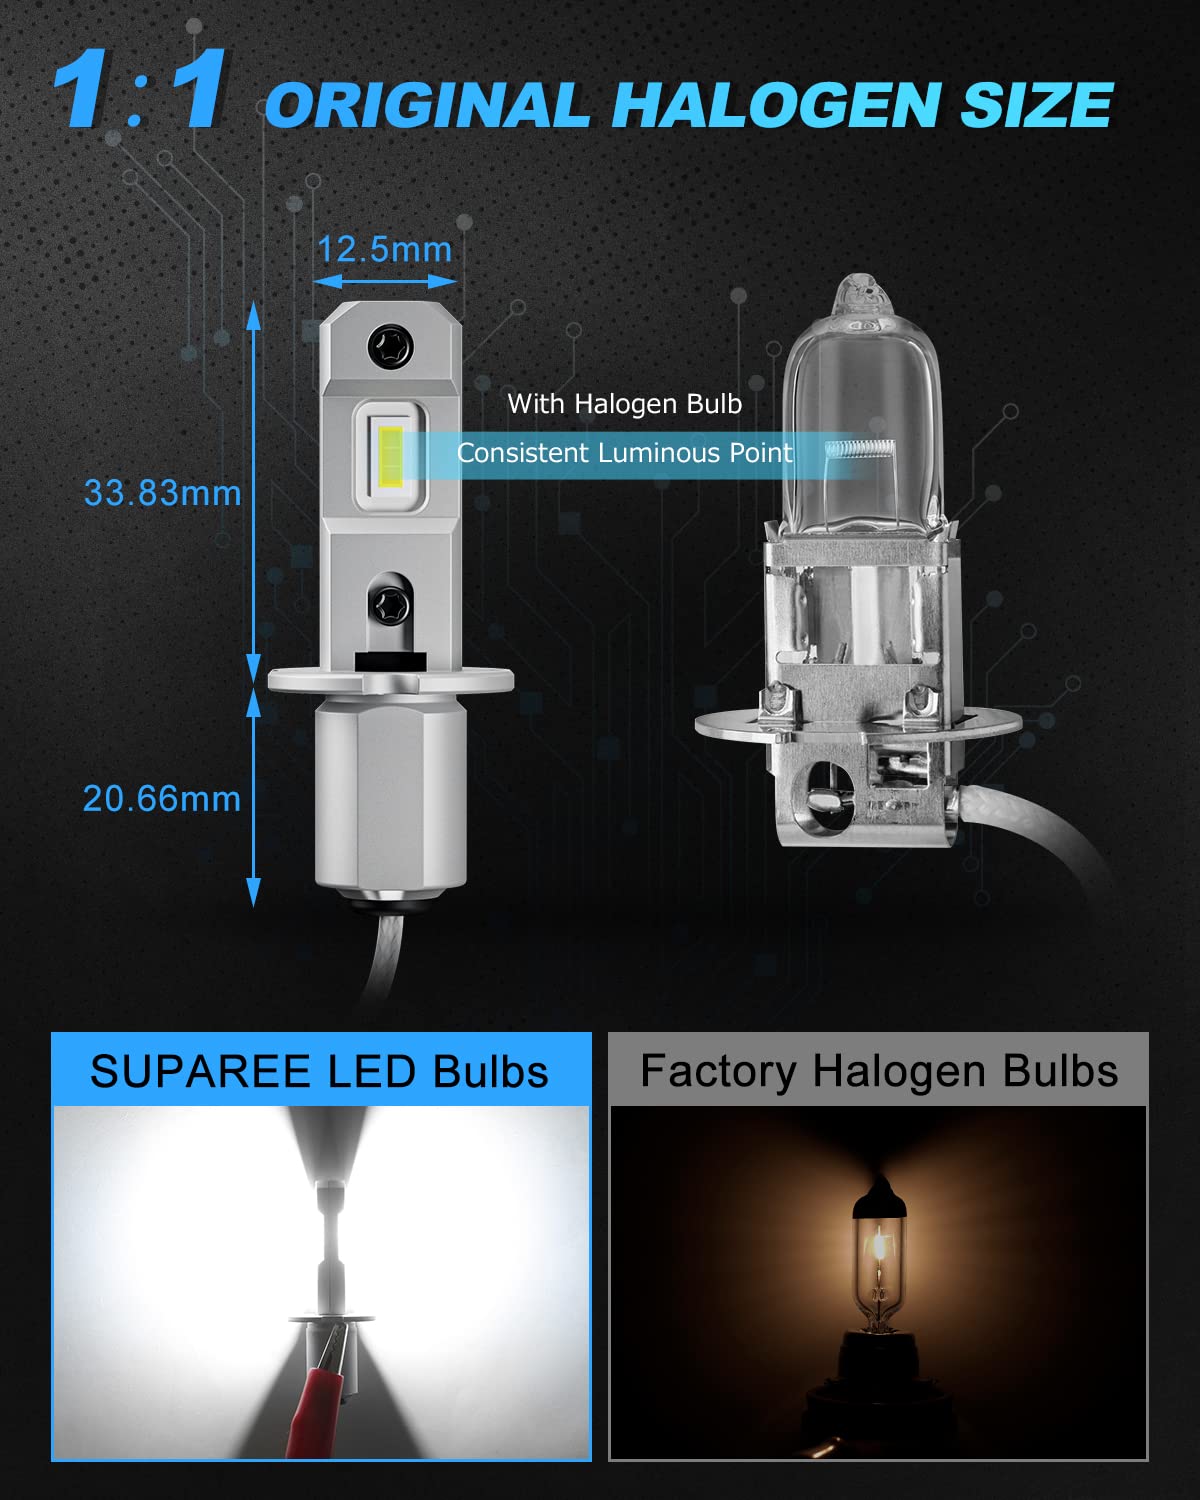 SUPAREE LED Fog Light Bulbs SUPAREE H3 LED Fog Light Bulbs 6500K White 1:1 Original Size Product description